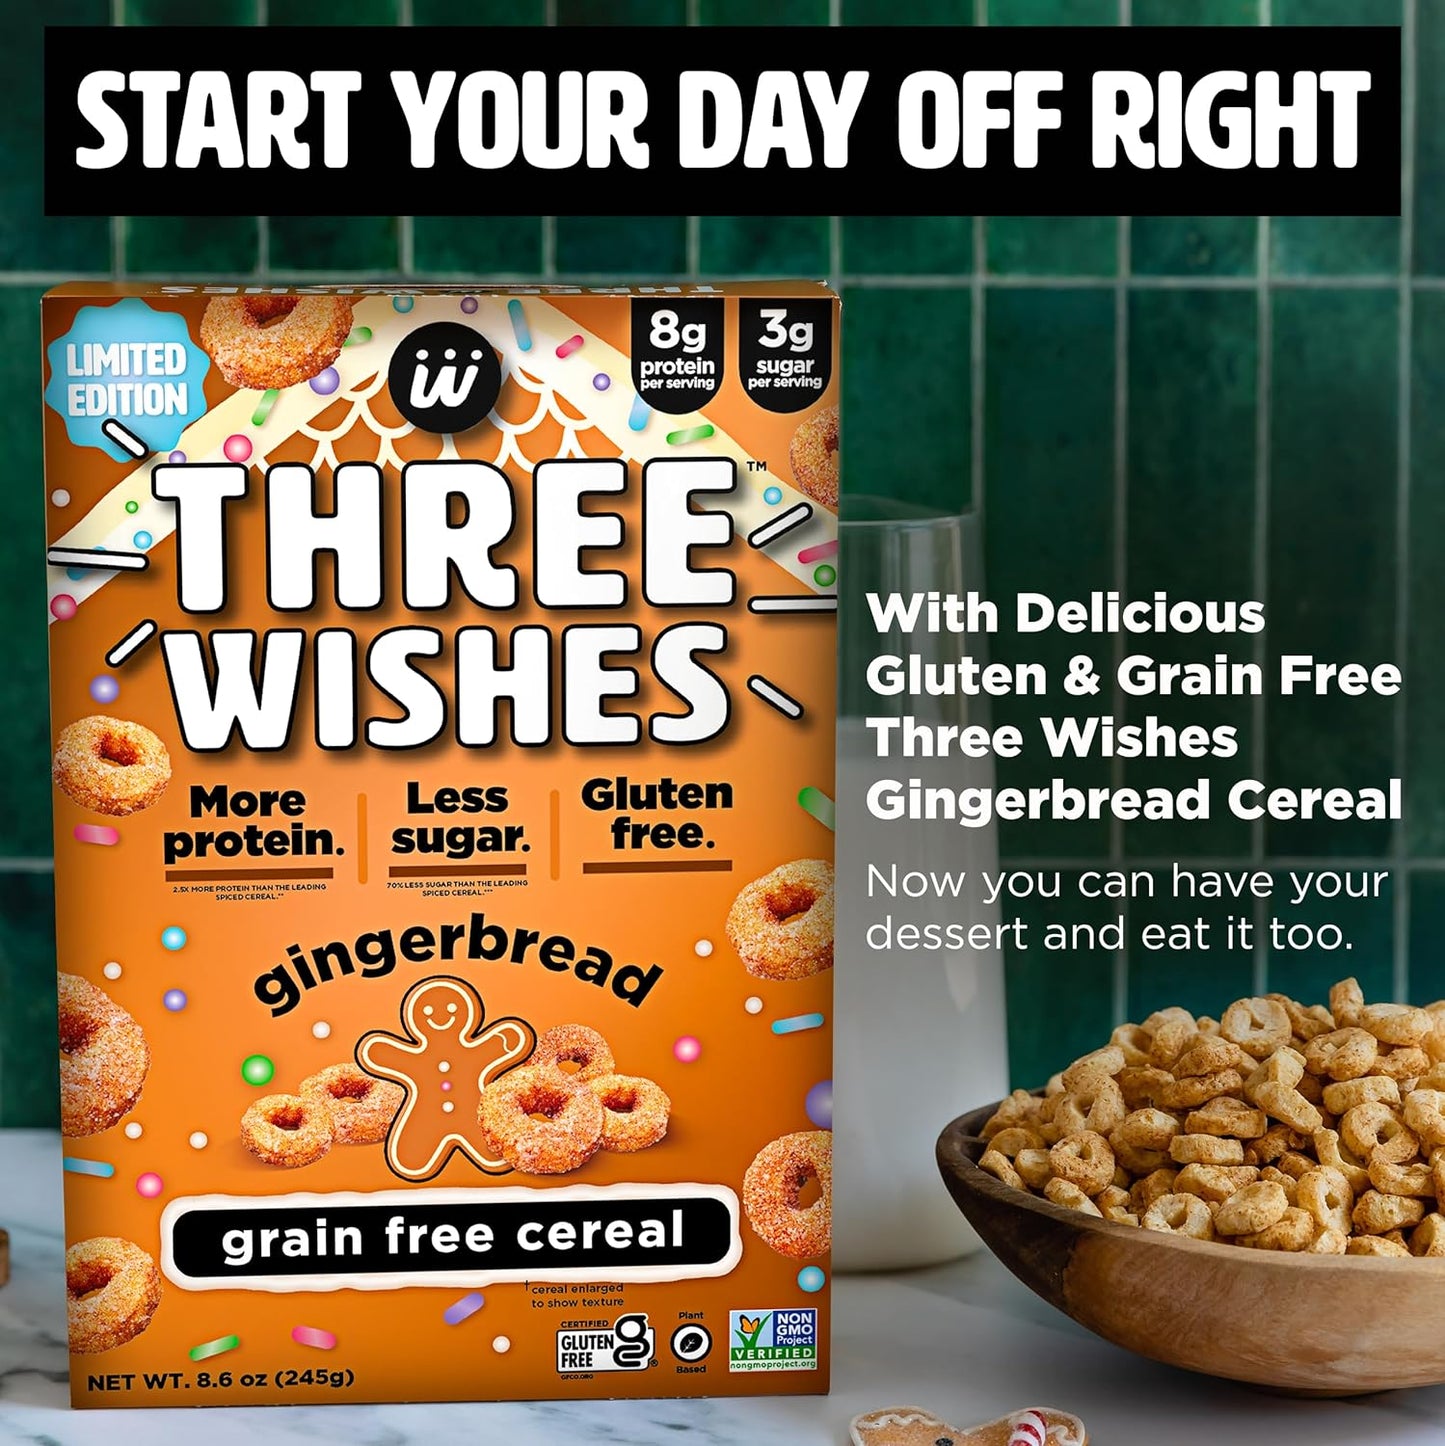 Three Wishes - "Gingerbread", Gluten Free - 8.6 oz